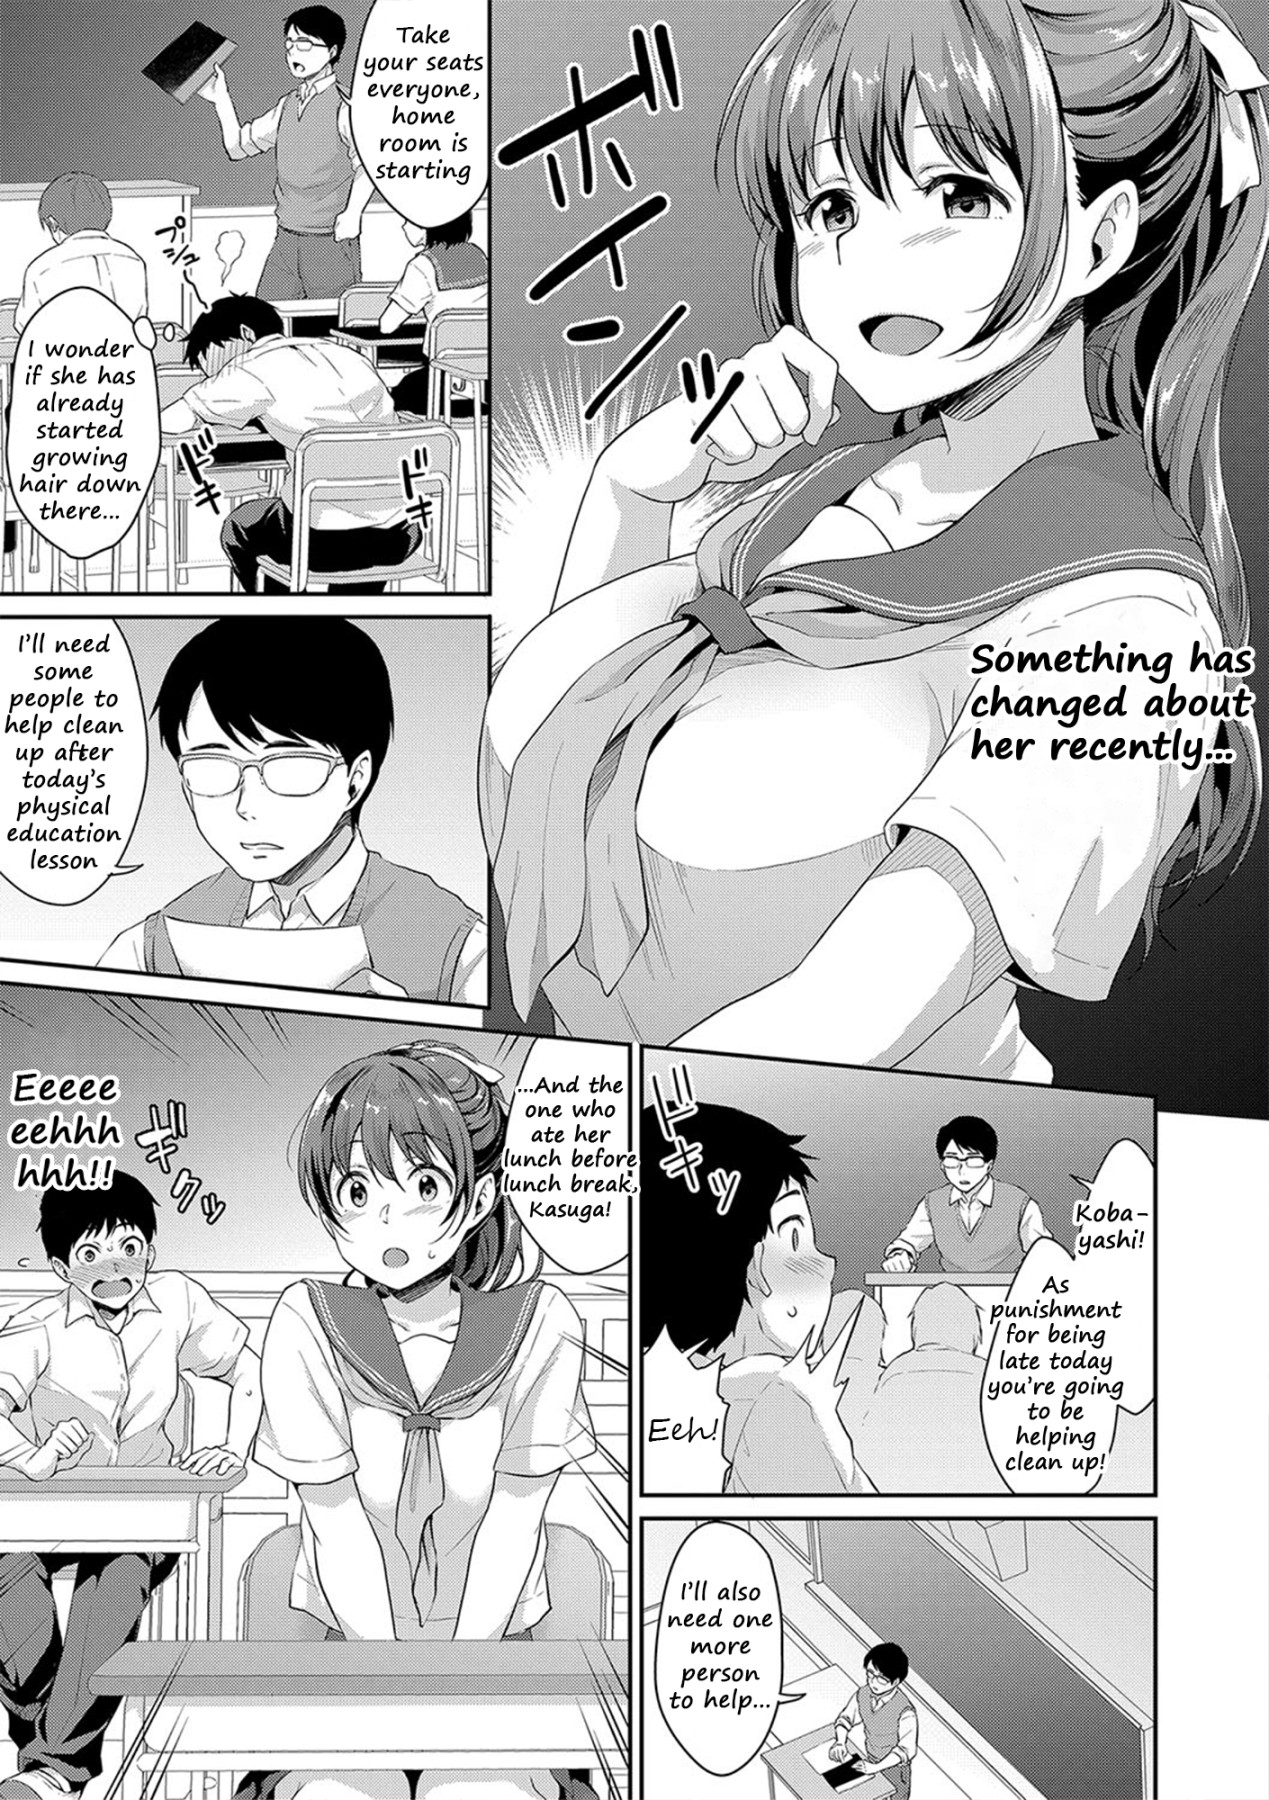 Hentai Manga Comic-Puberty Study Session 3-Read-3